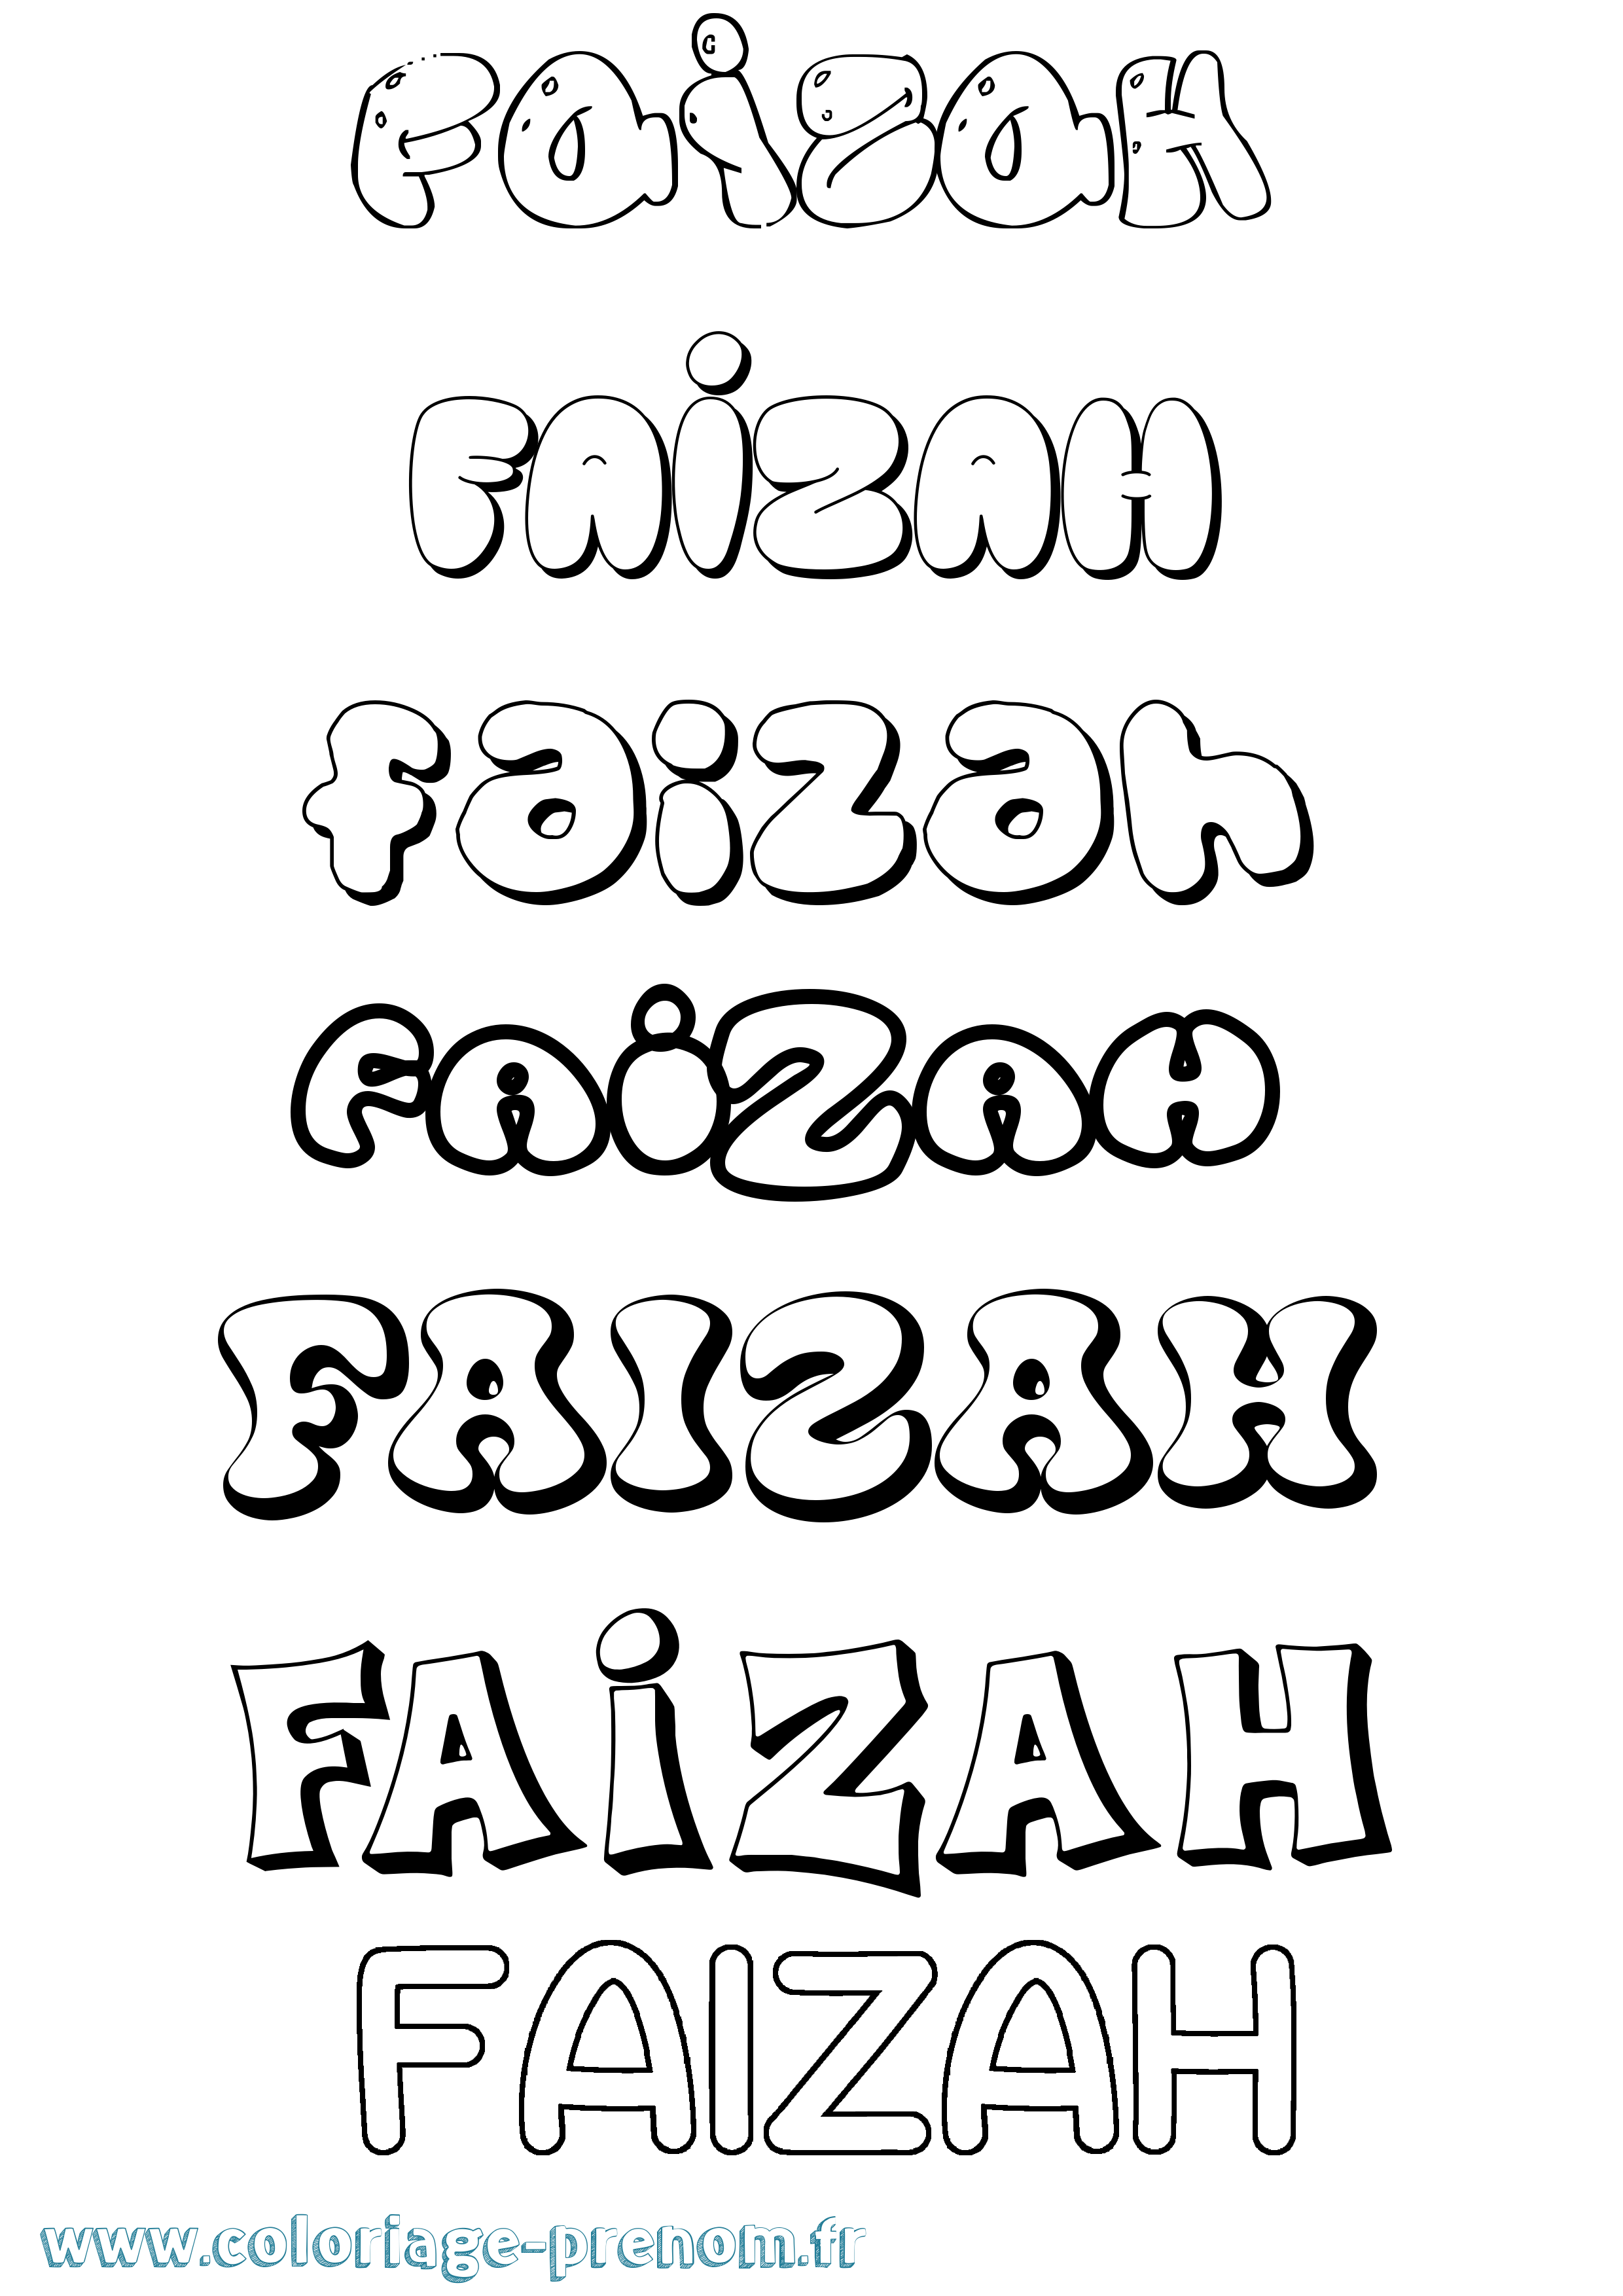 Coloriage prénom Faizah Bubble